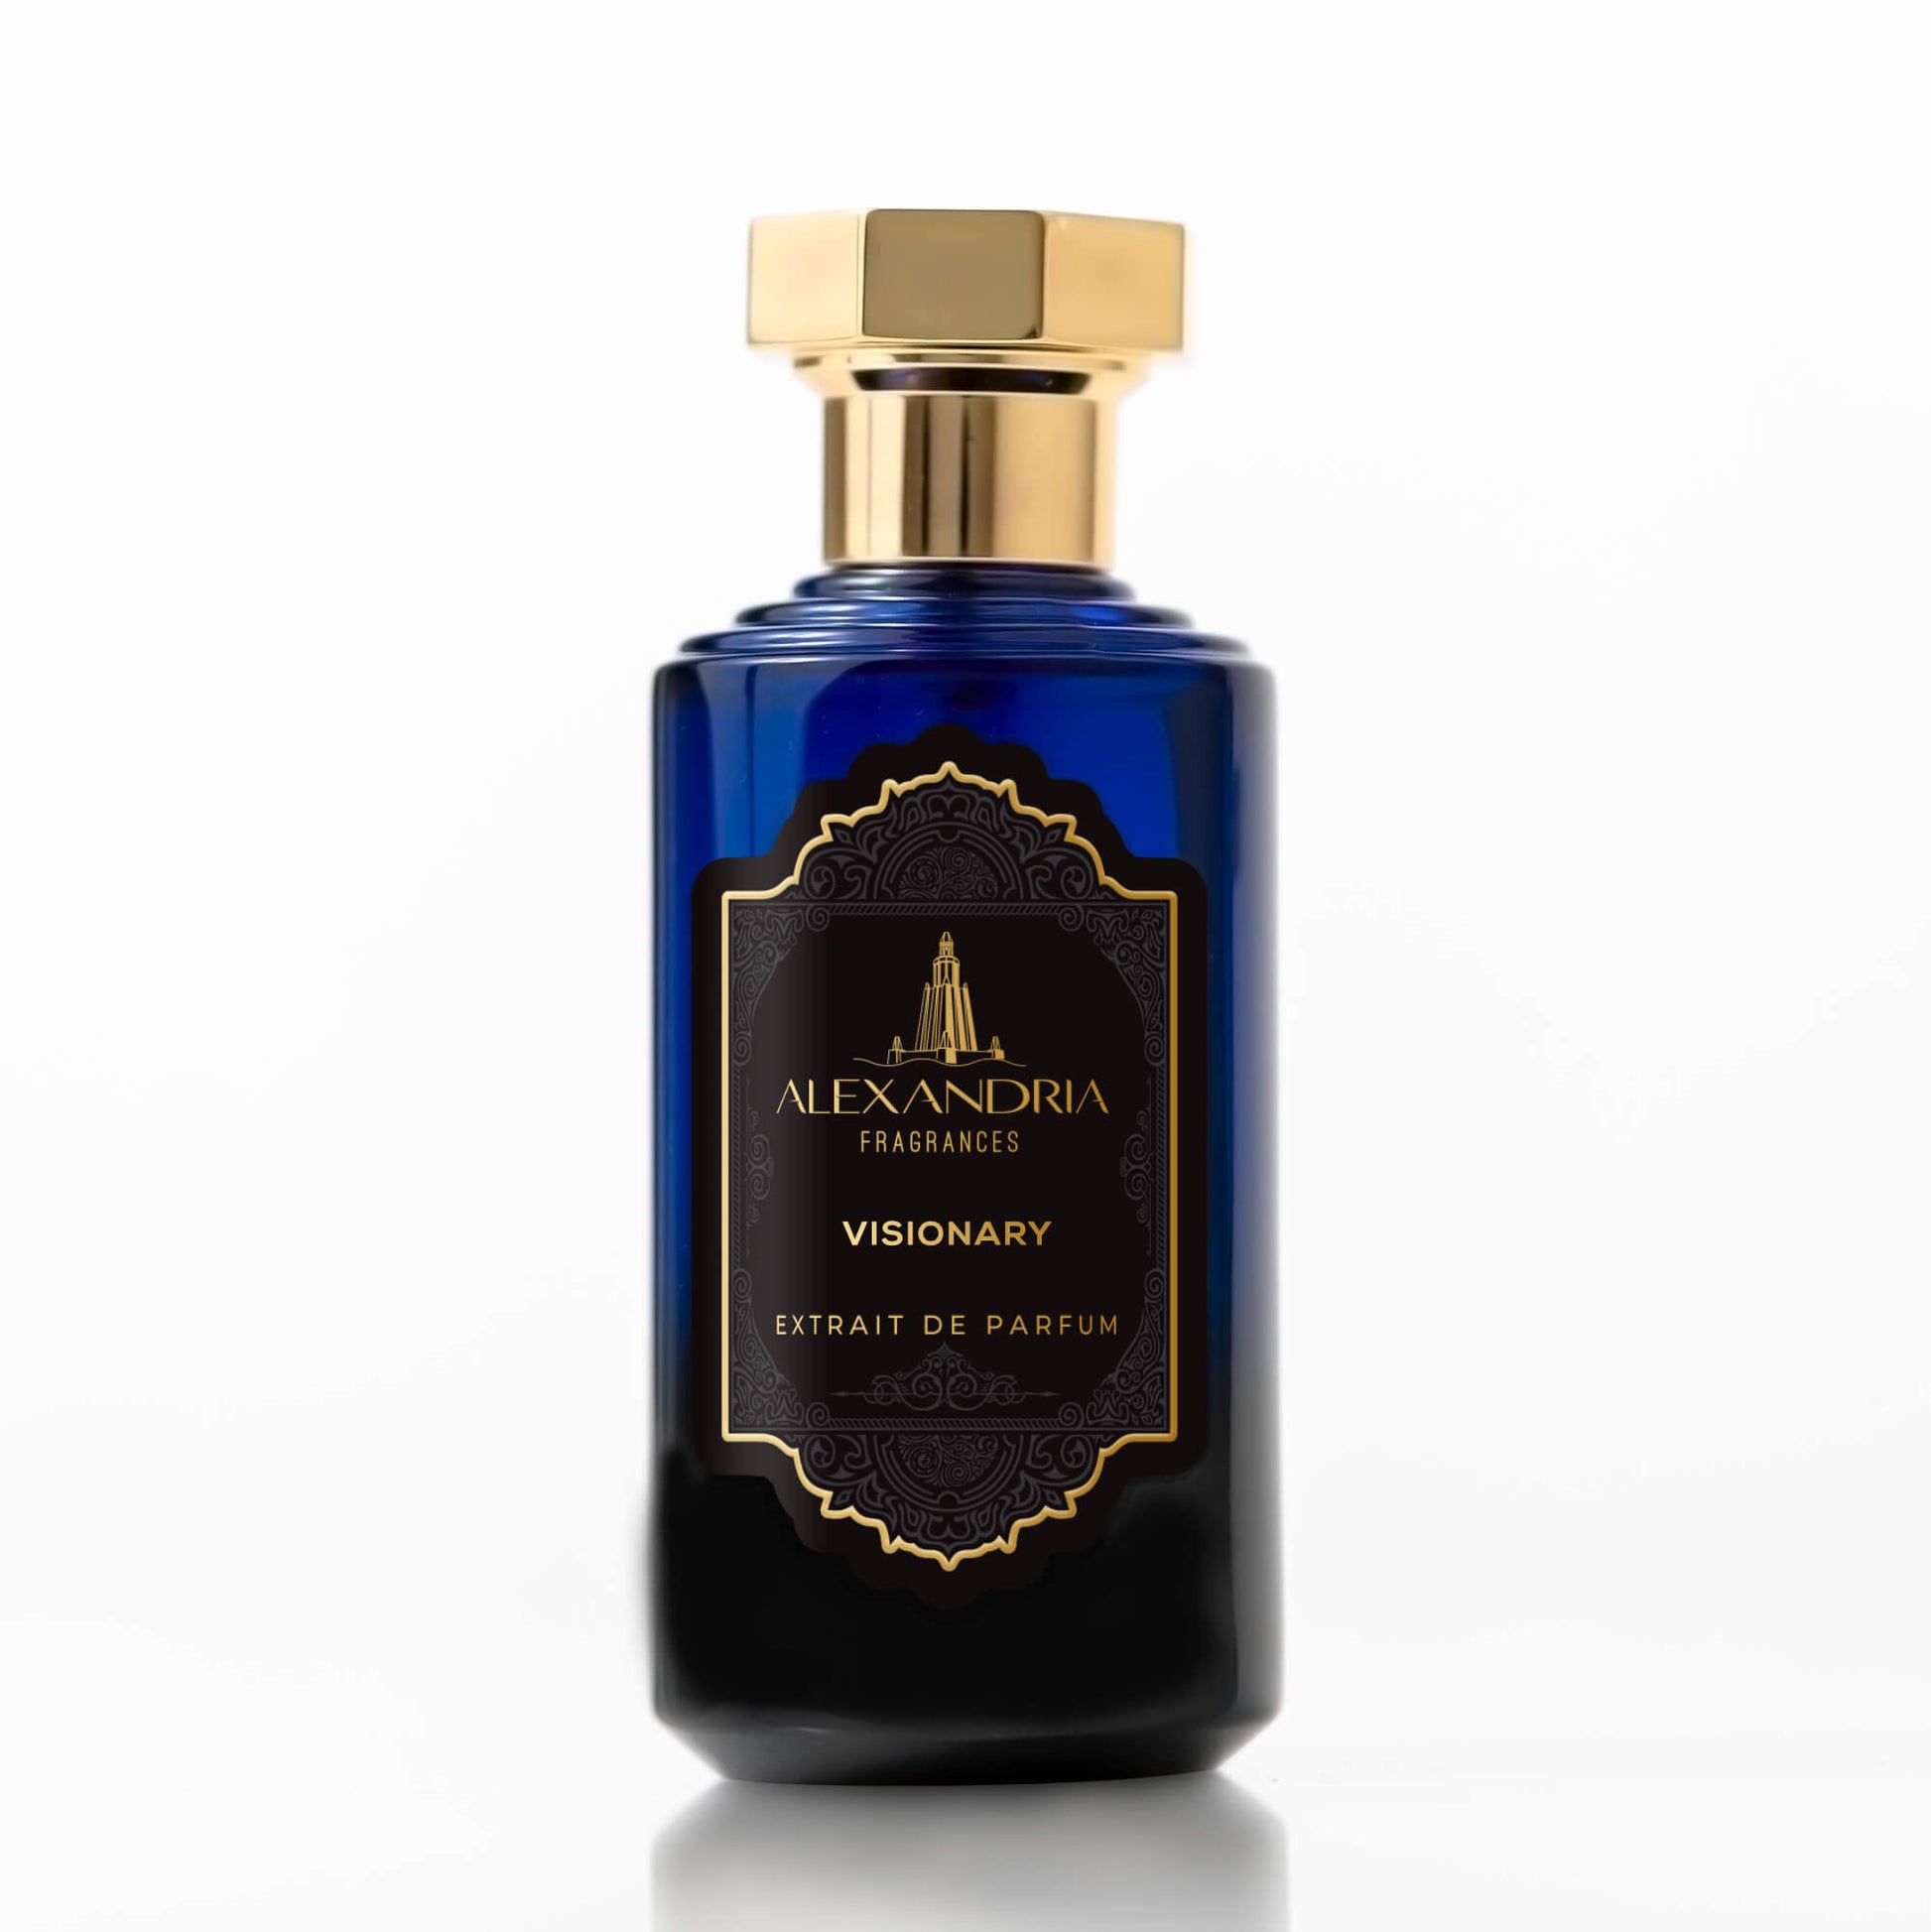 Louis Vuitton Imagination Edp 100 Ml Men's Perfume